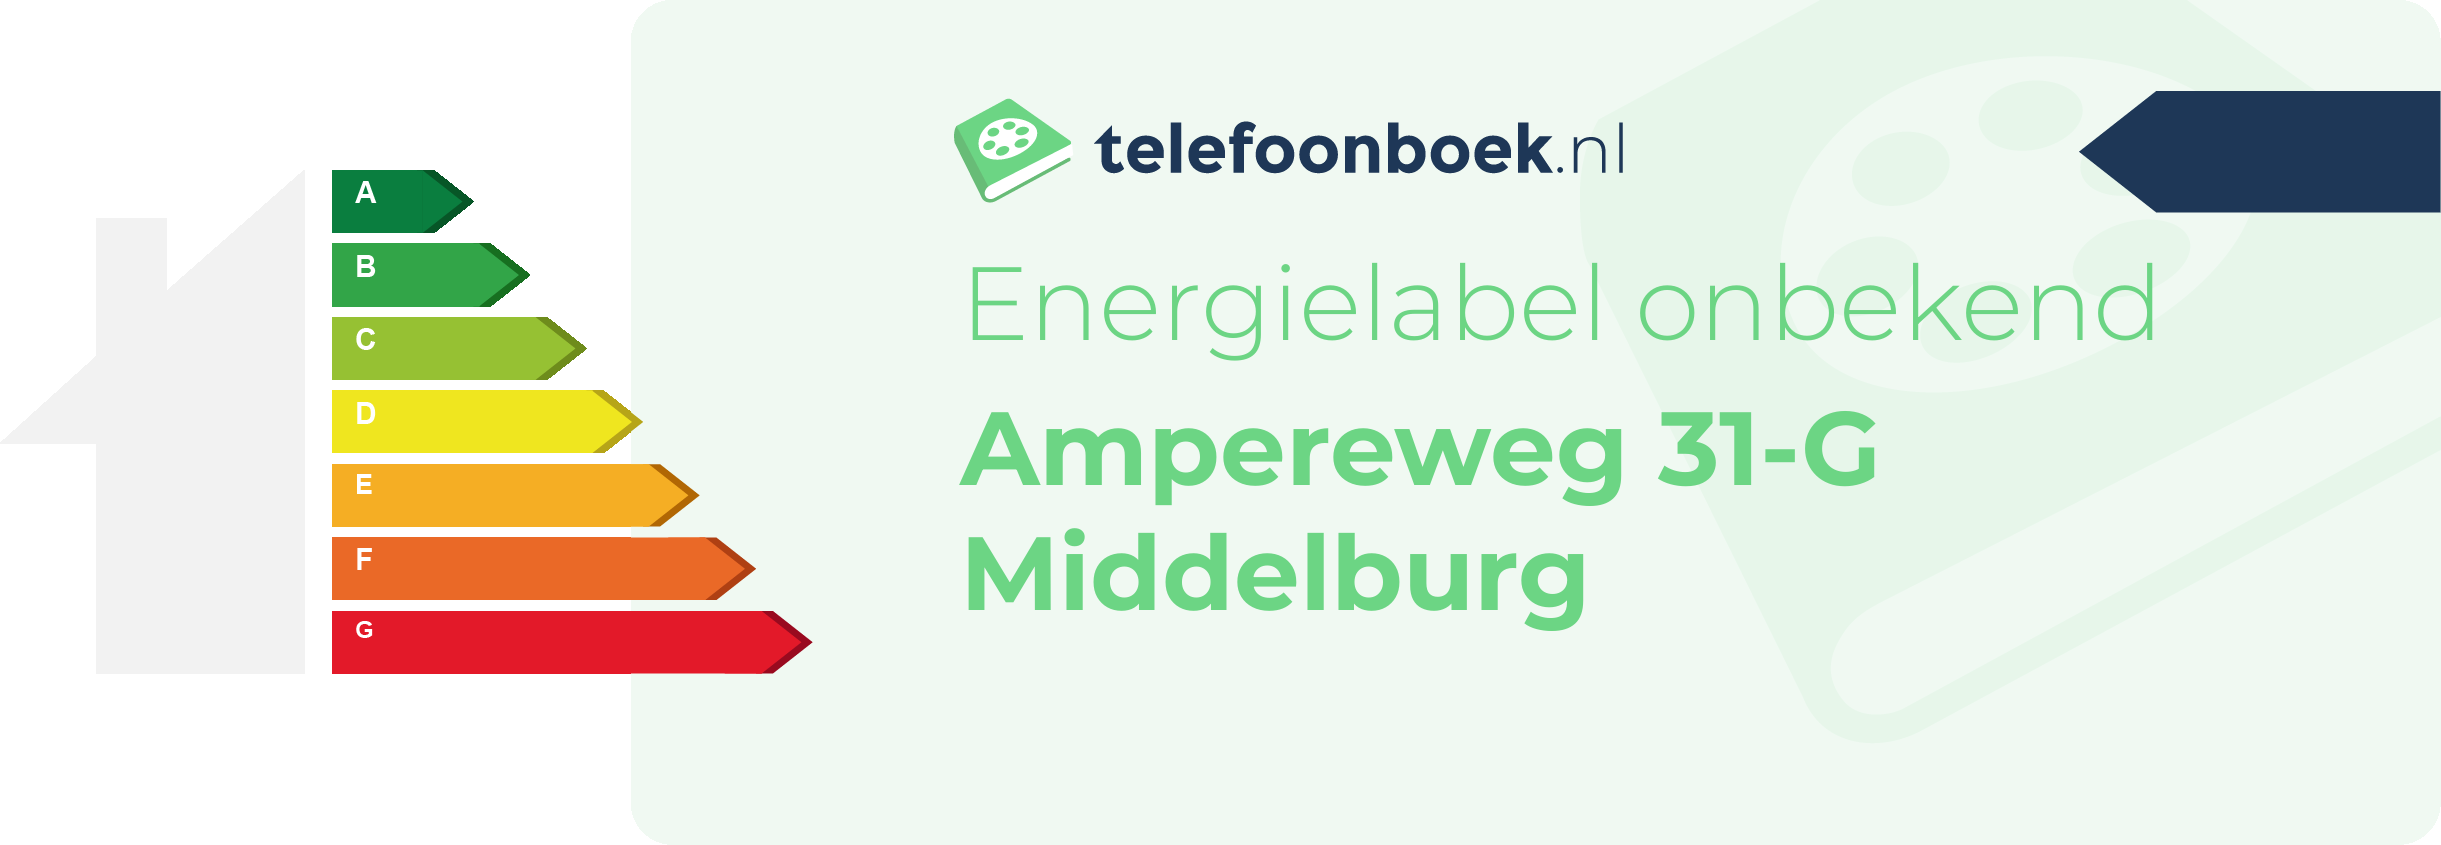 Energielabel Ampereweg 31-G Middelburg